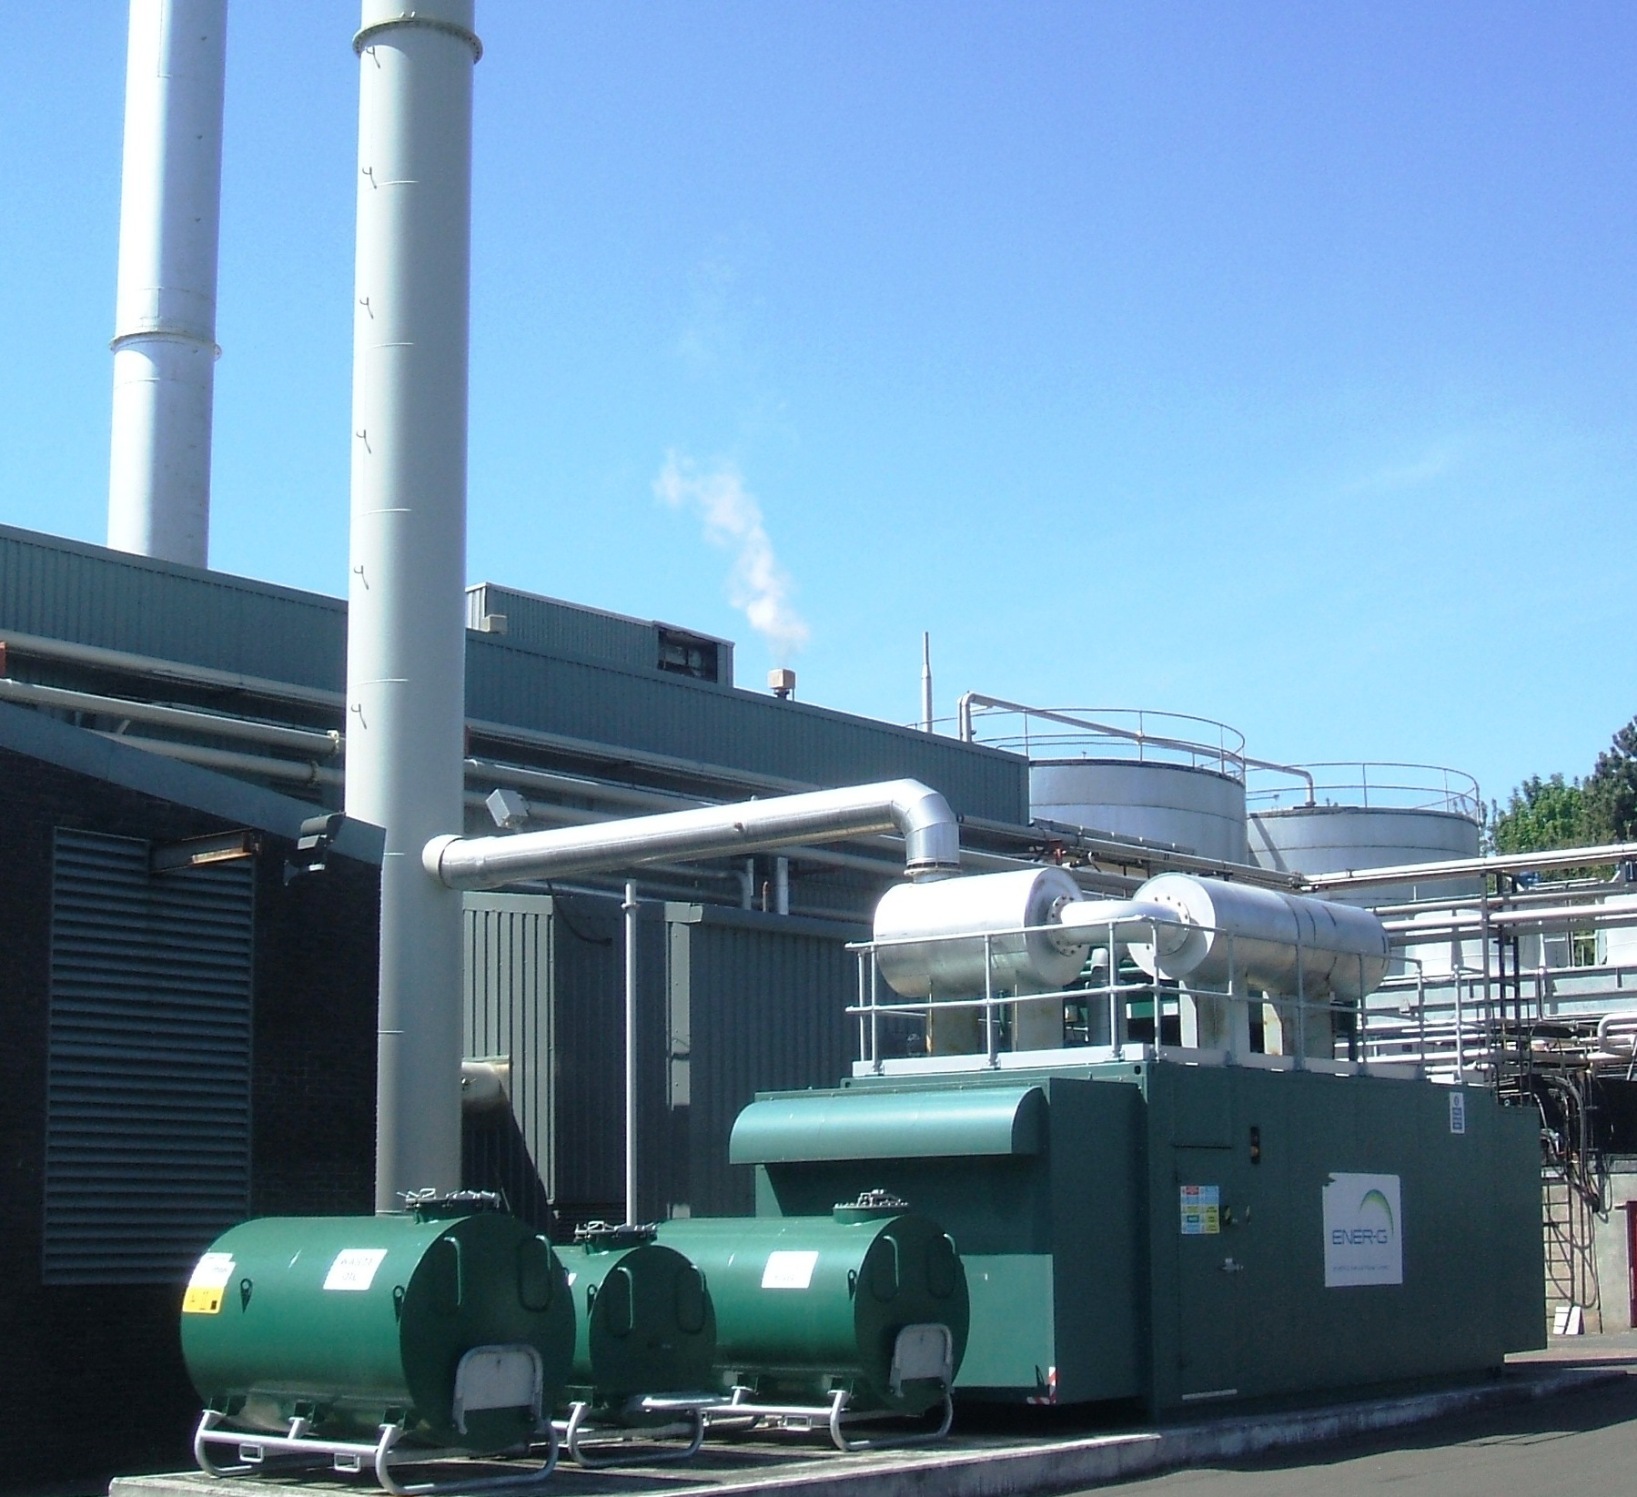 ENER-G biogas generation facility at North British Distillery anaerobic digestion plant